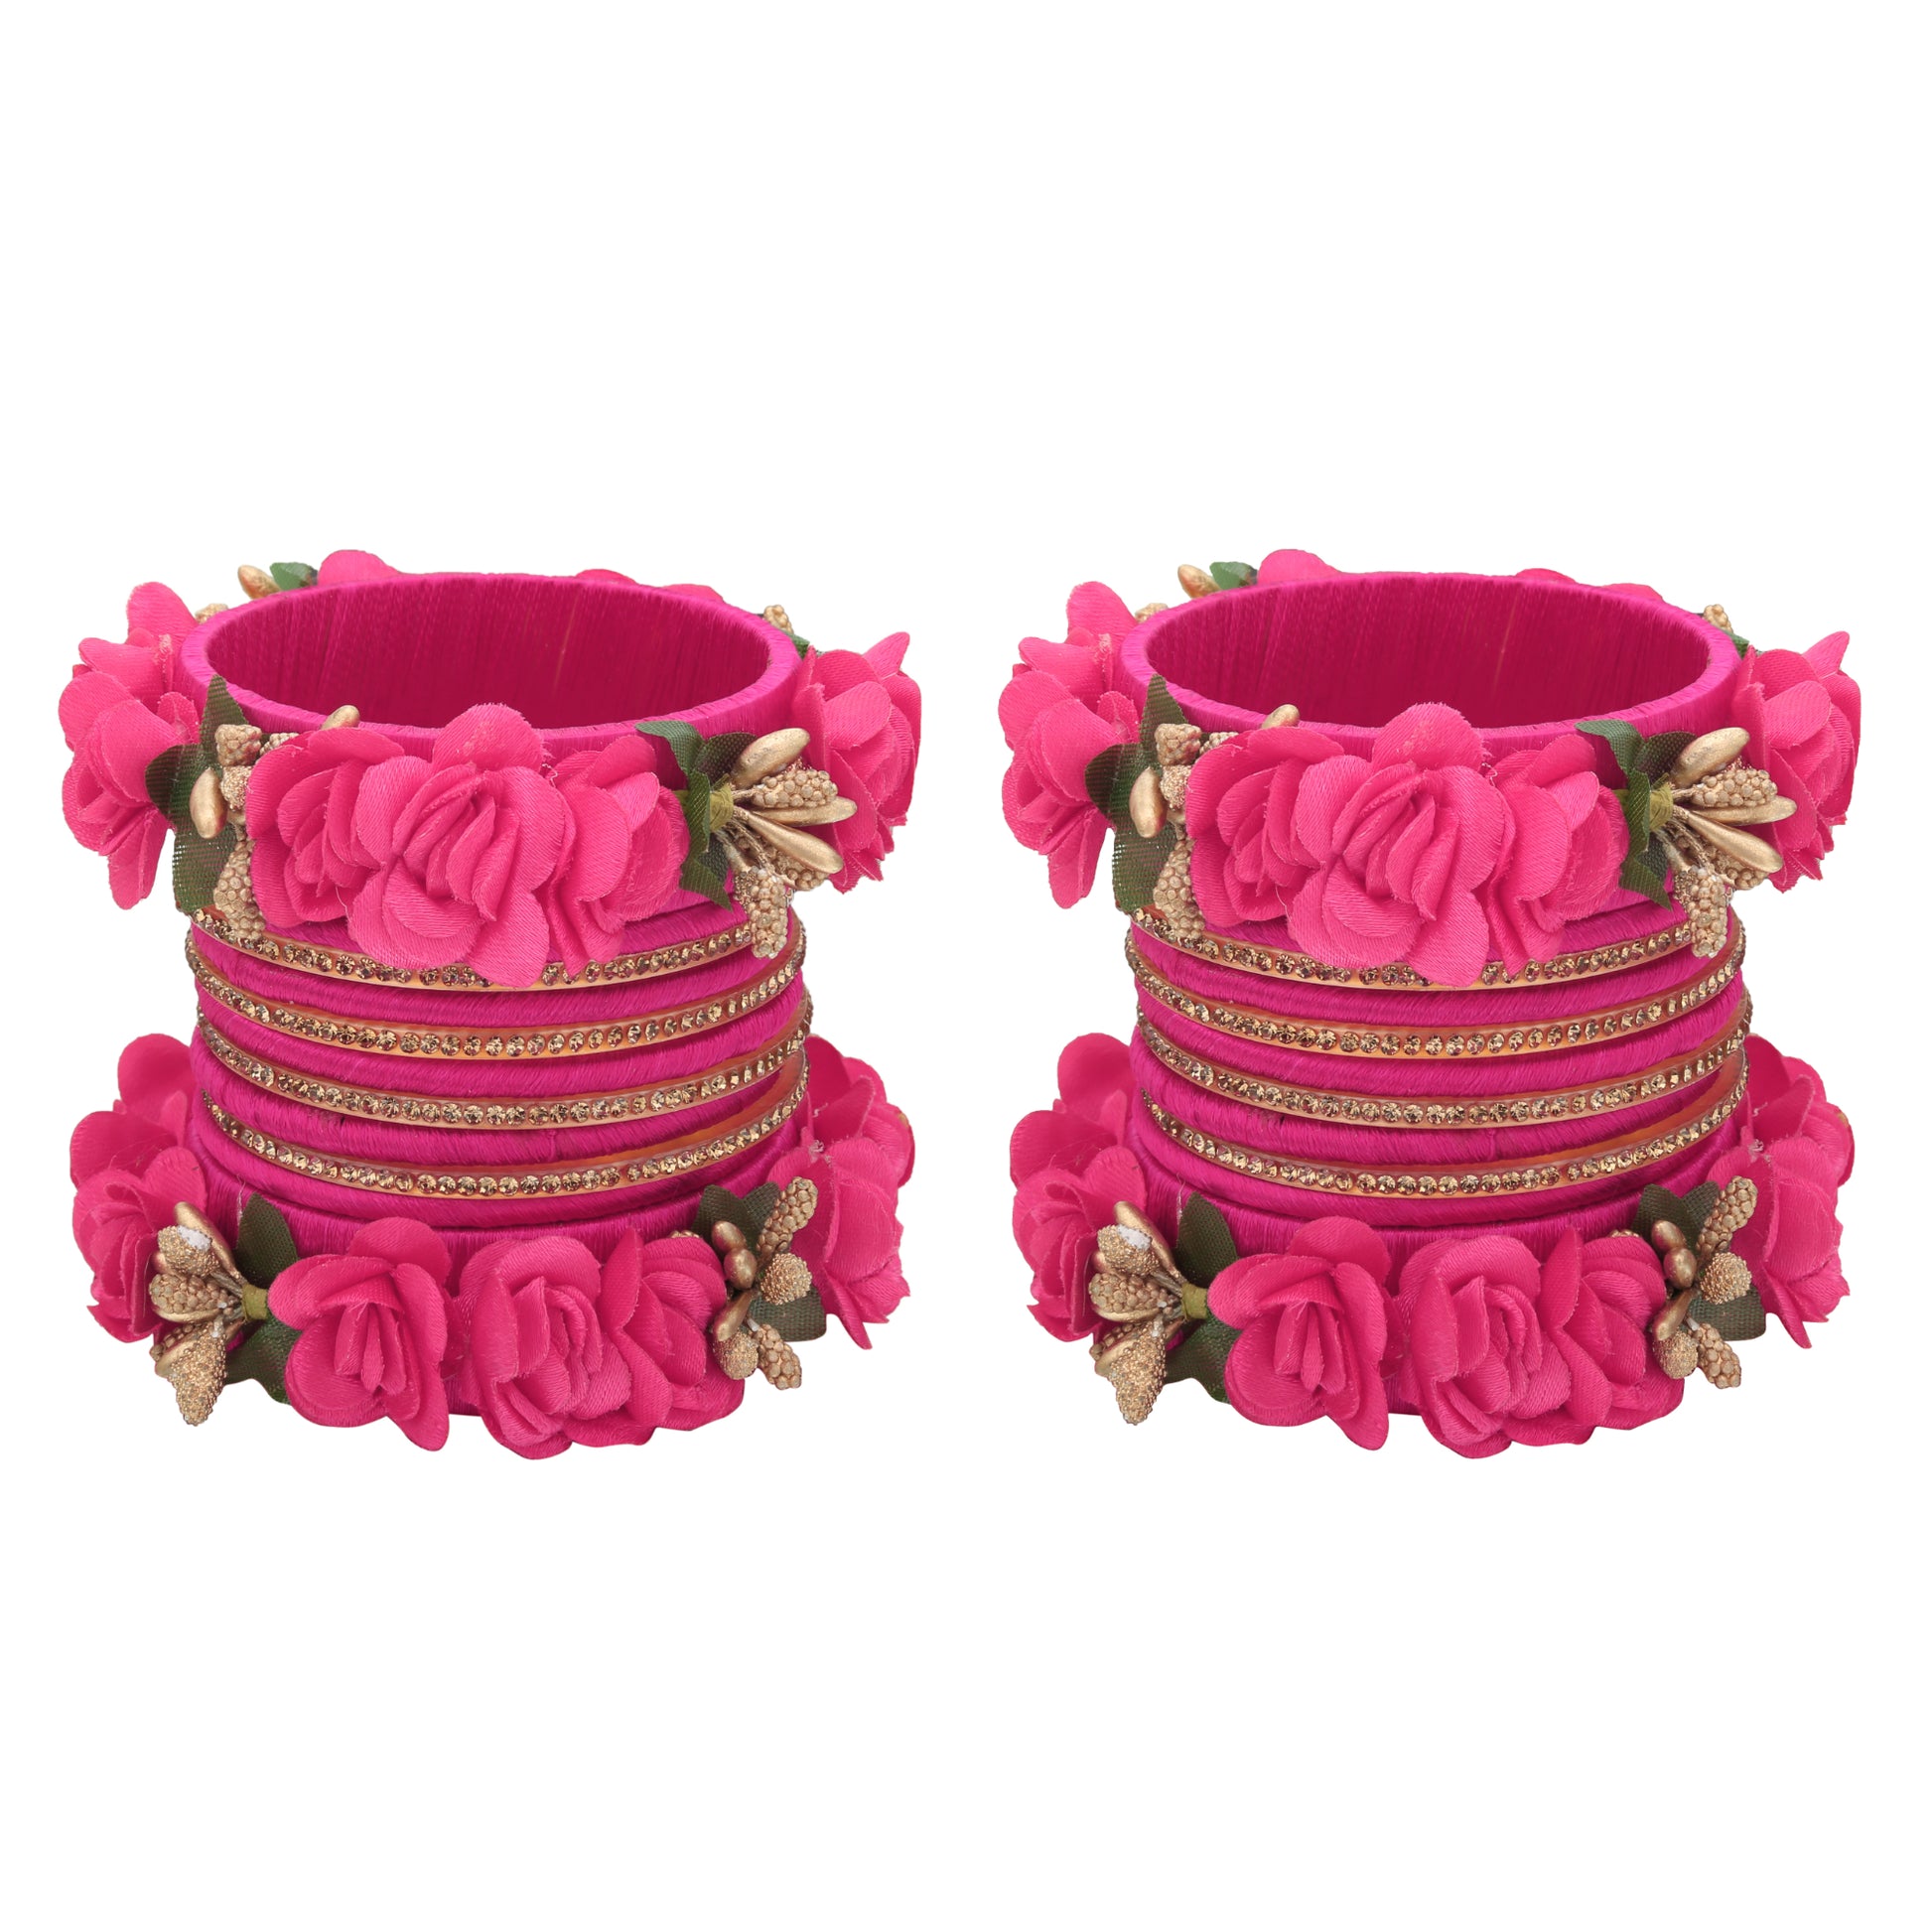 sukriti beautiful handcrafted magenta flower designer silk thread bridal chuda wedding bangles for women – set of 22